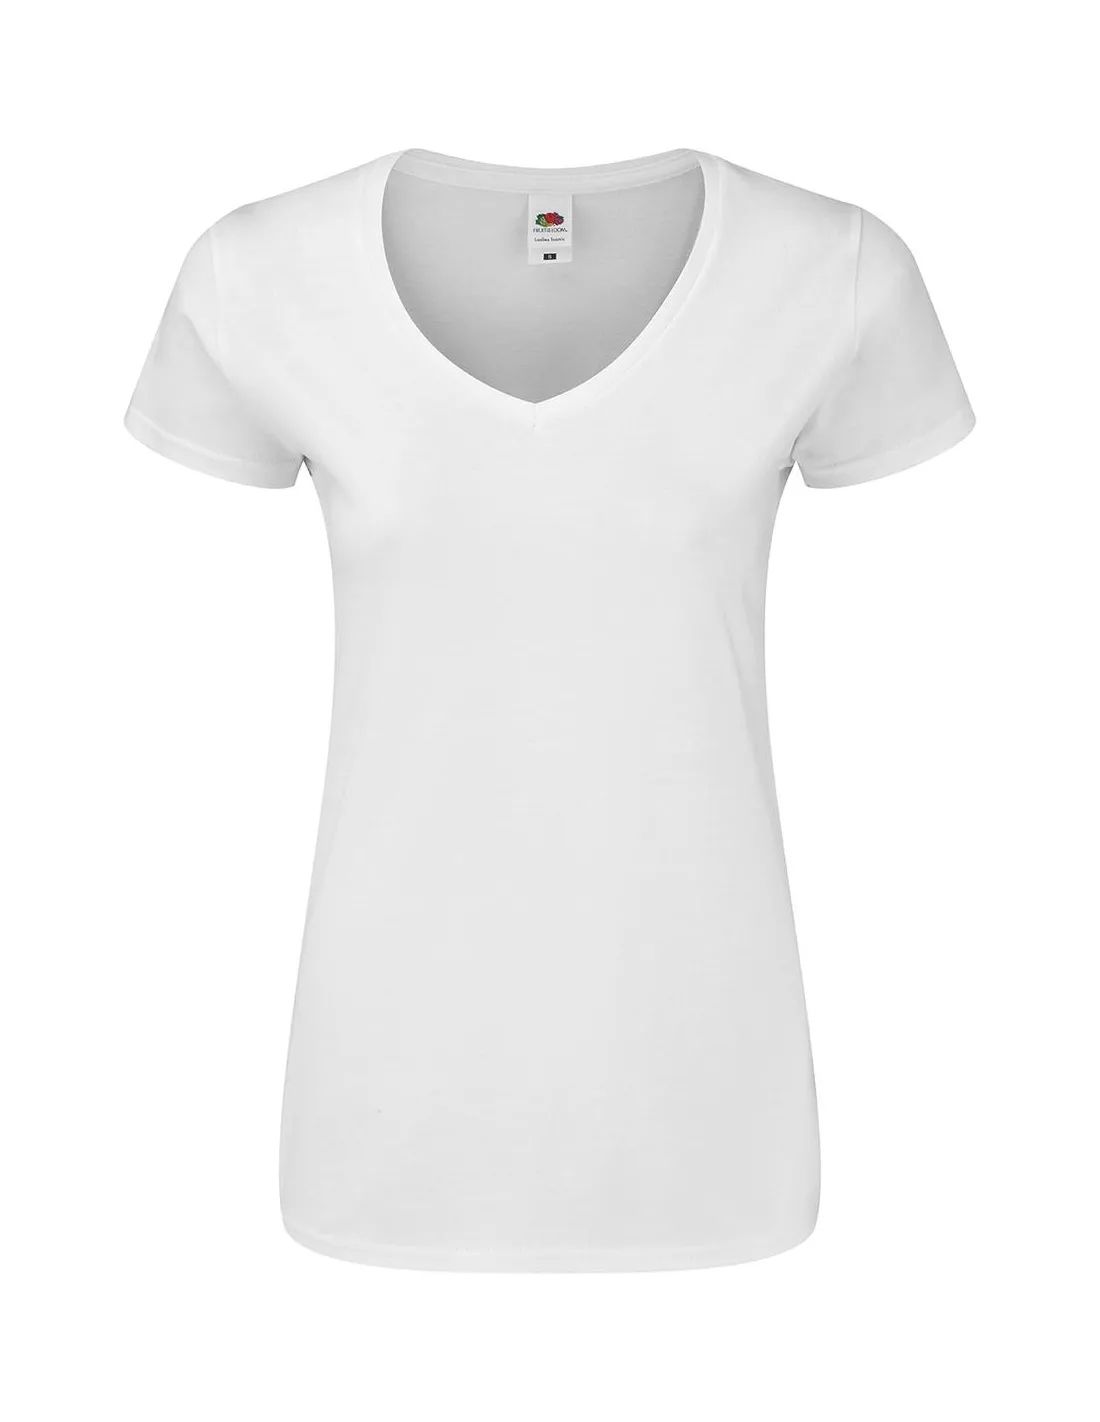 Camiseta Iconic cuello V 150 mujer